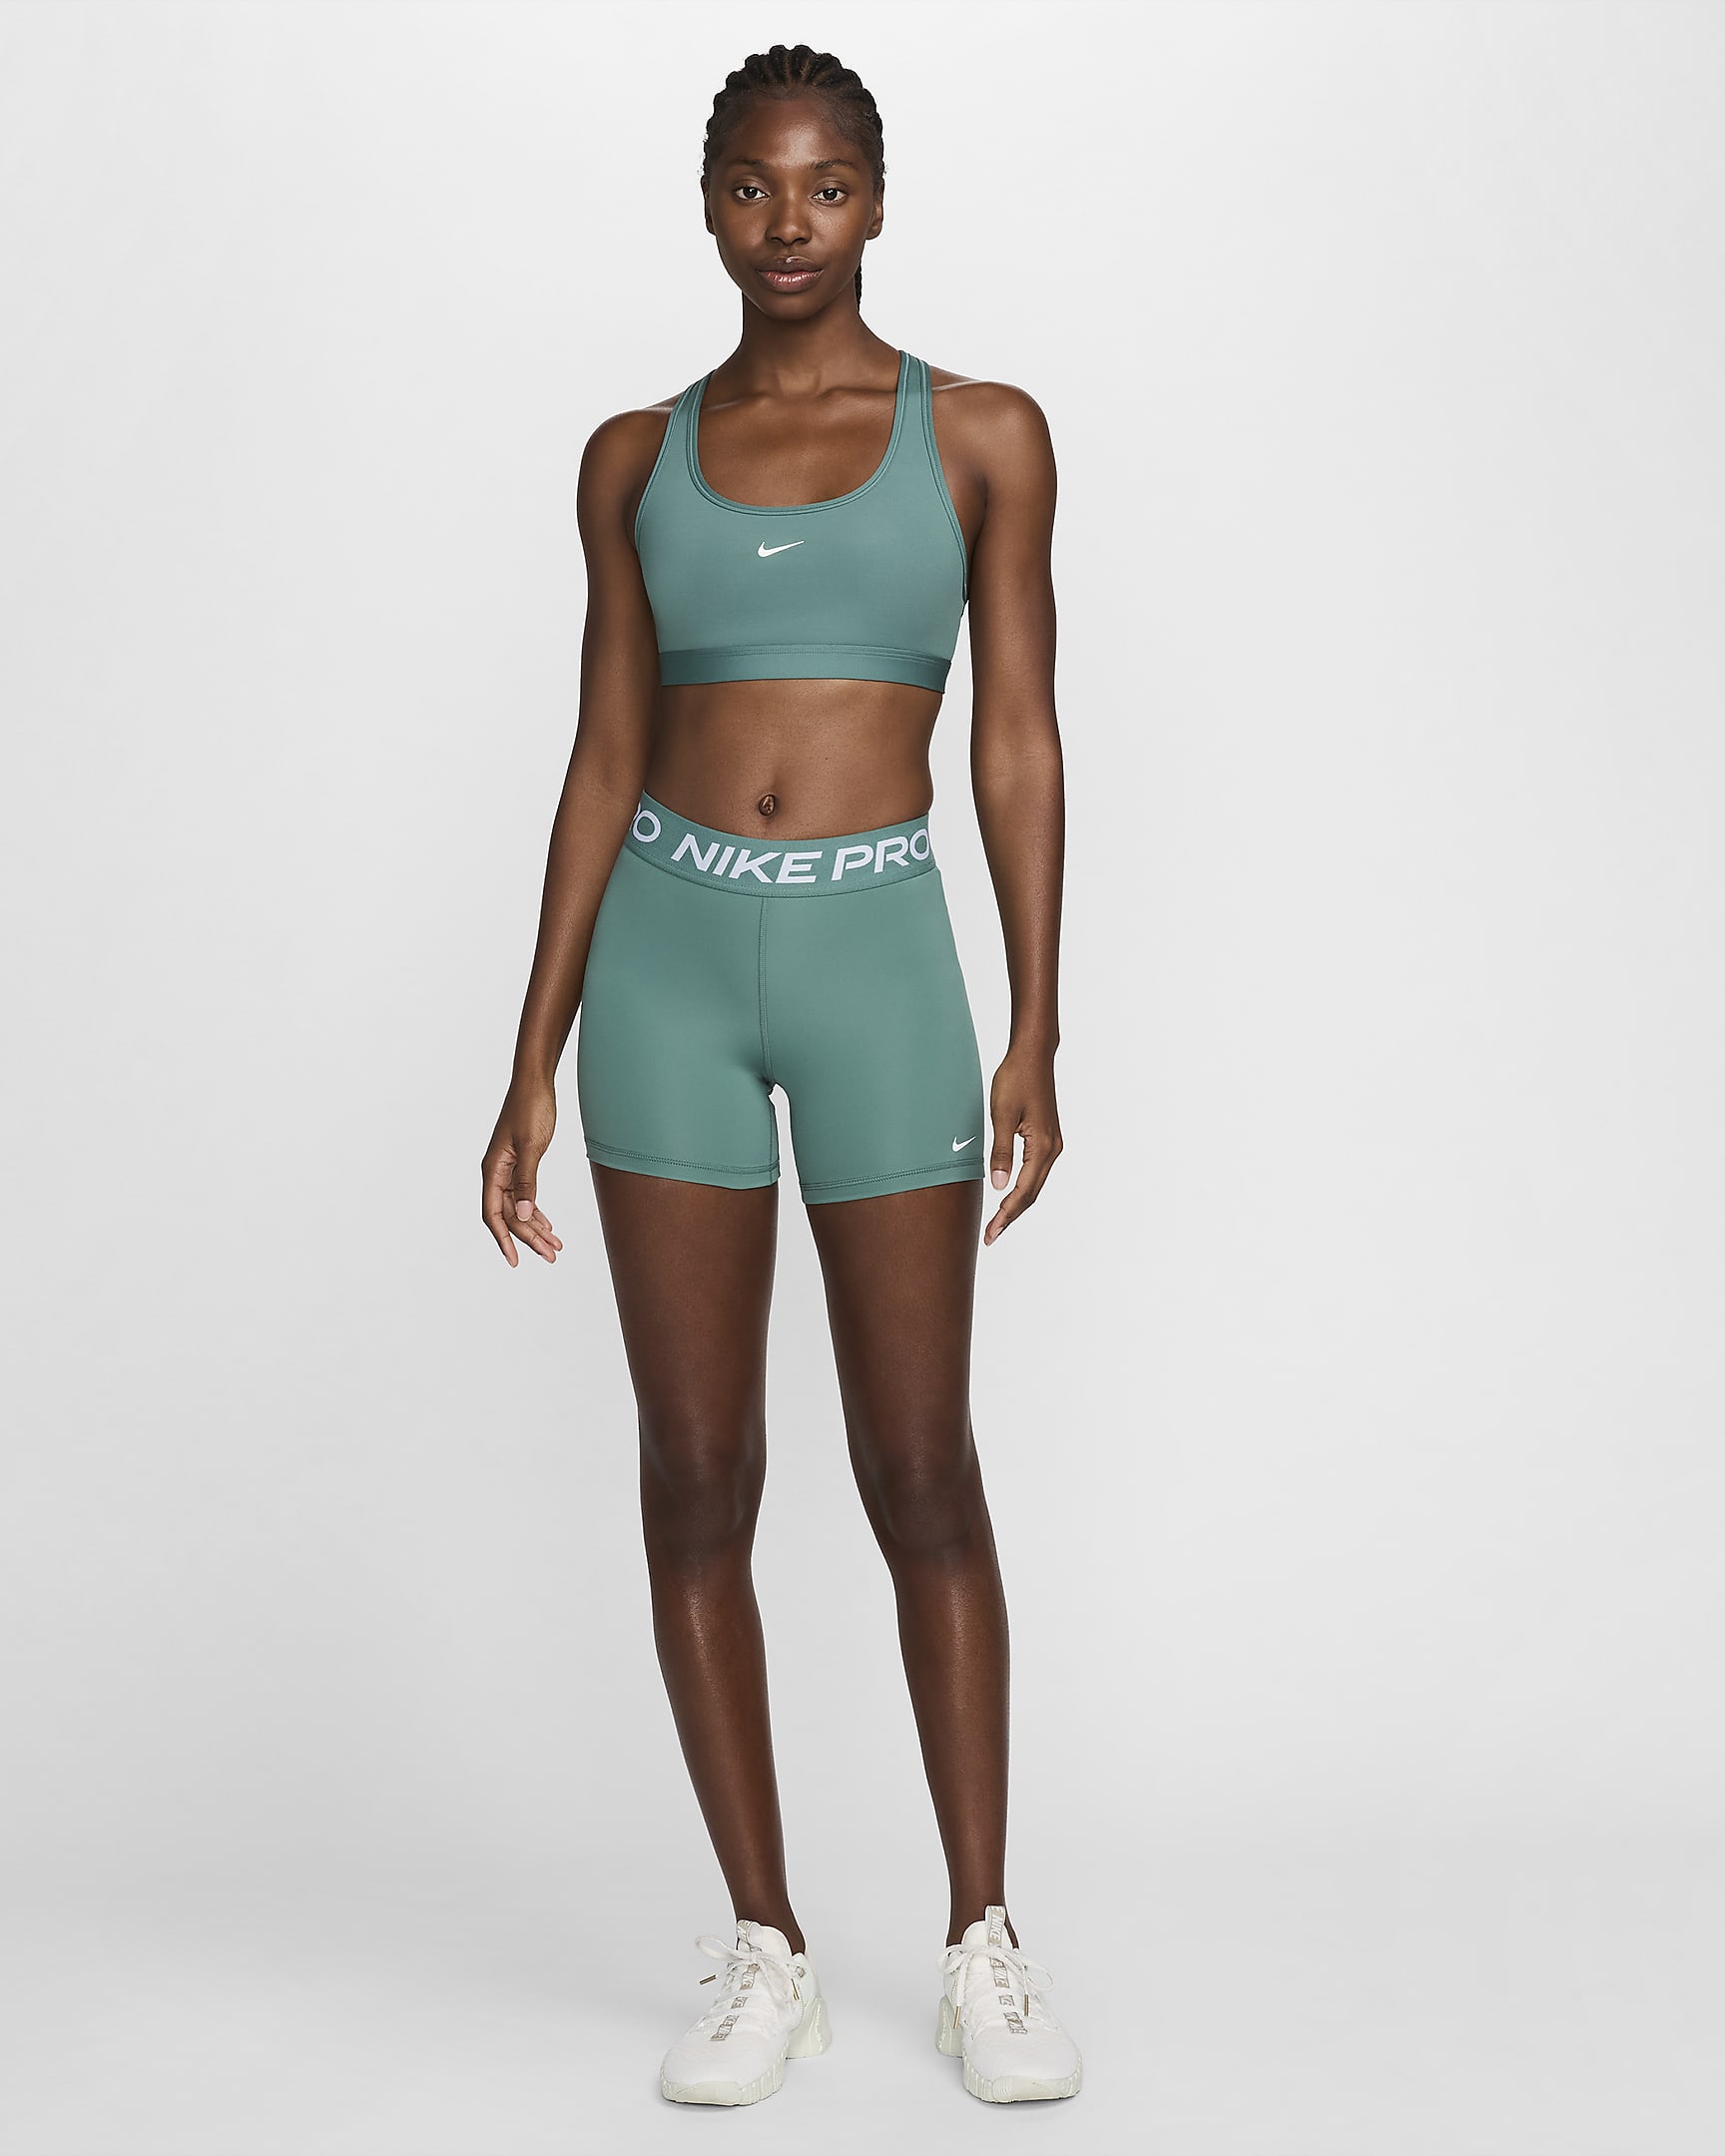 Nike Pro 365 Damenshorts (ca. 13 cm) - Bicoastal/Weiß